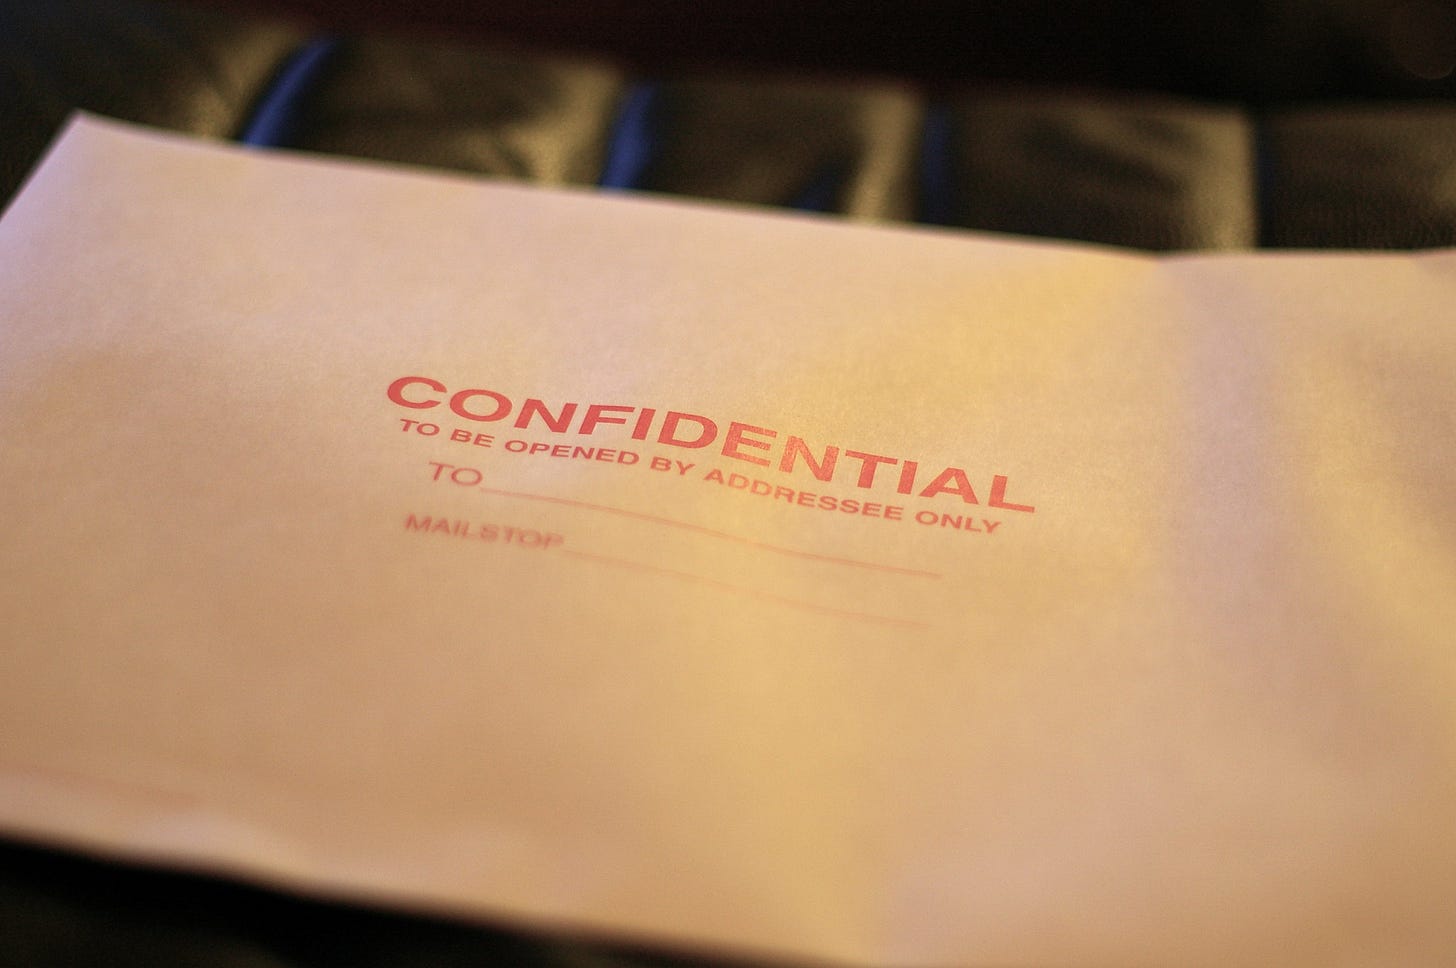 Confidential envelope